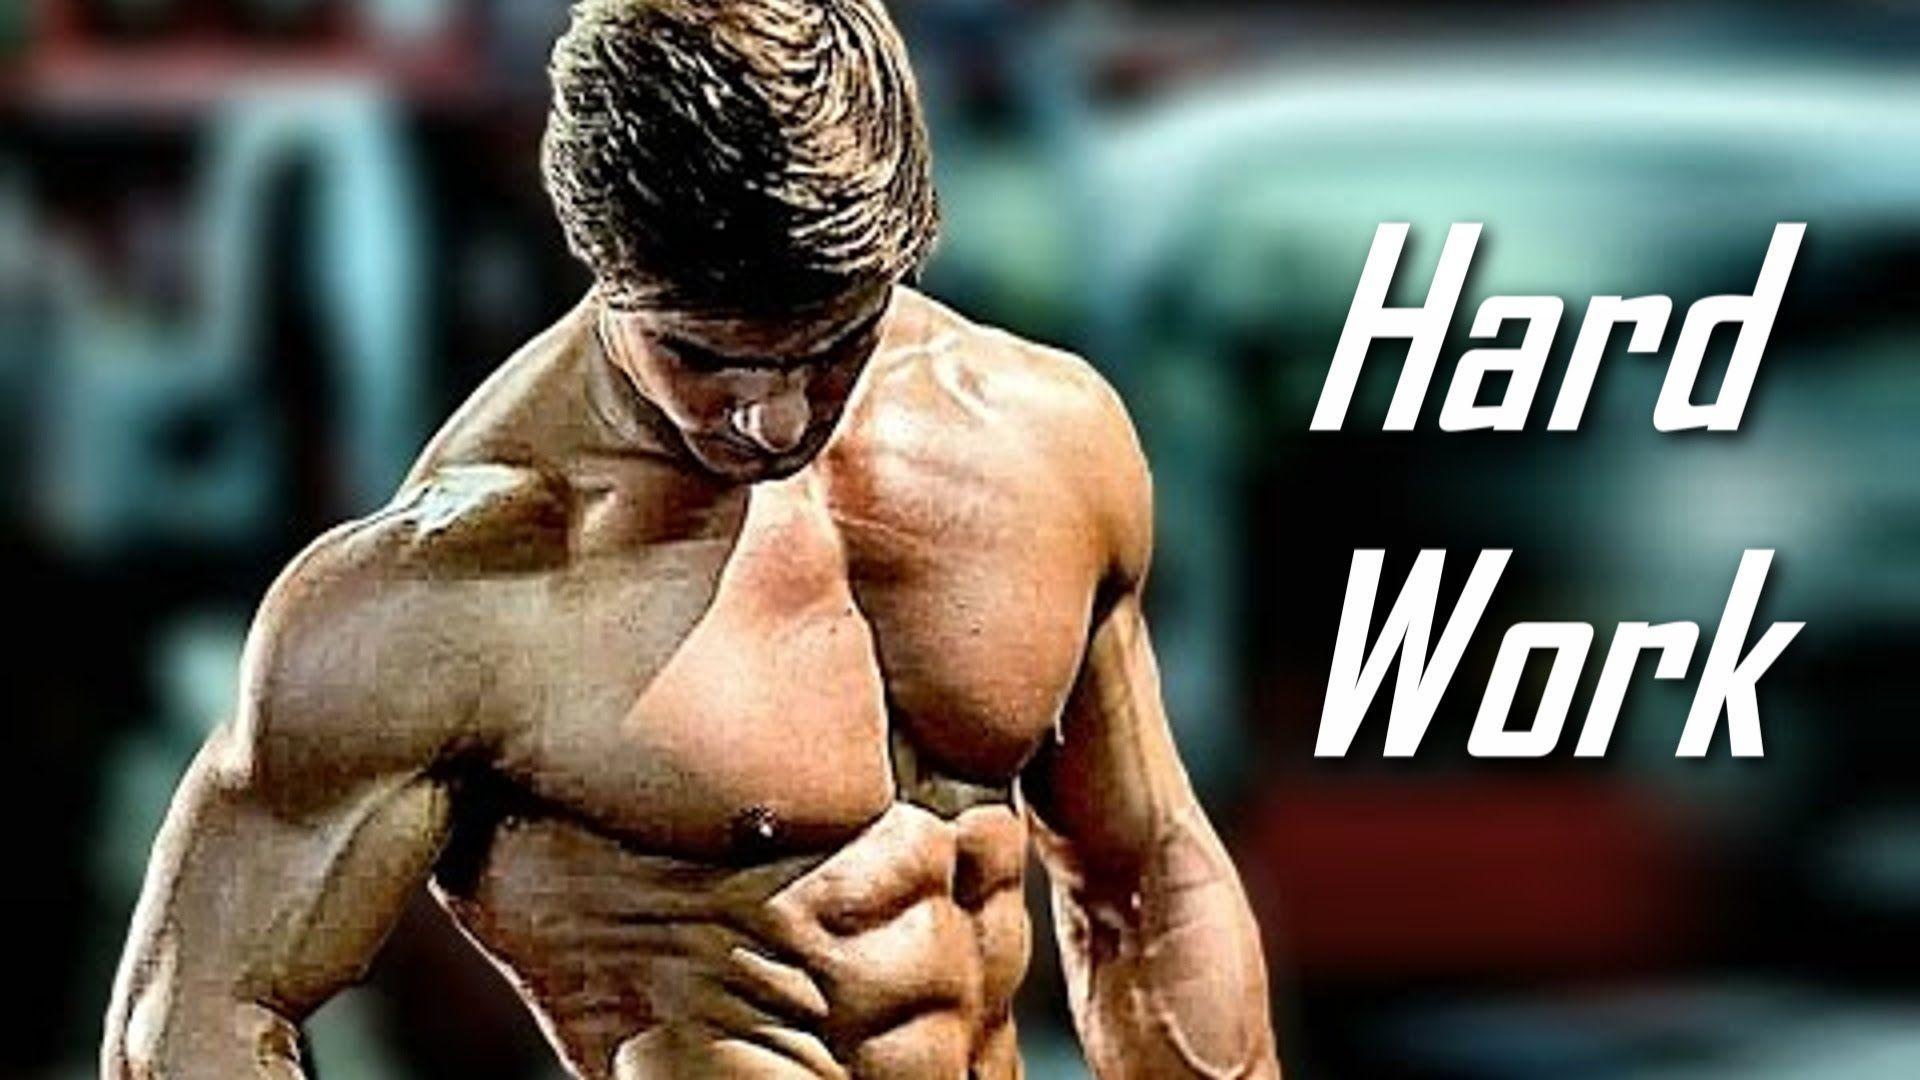 Aesthetics Natural Bodybuilding Motivation - "HARD WORK" 2015